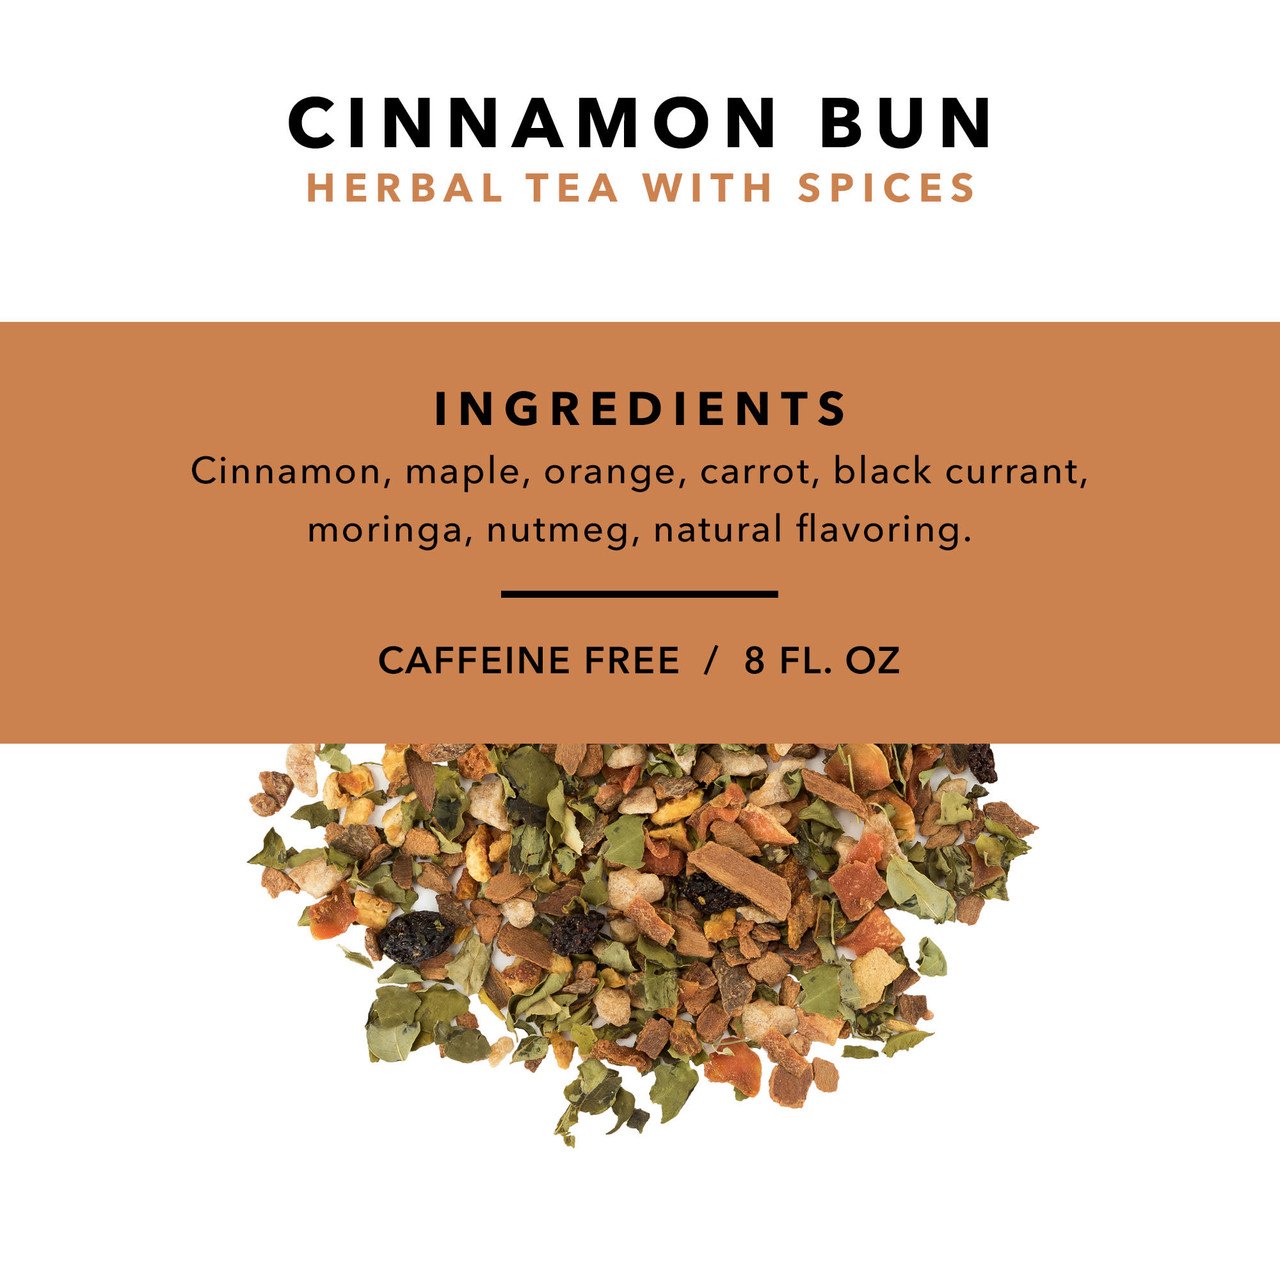 Cinnamon Bun Loose Leaf Tea Tins by Pinky Up